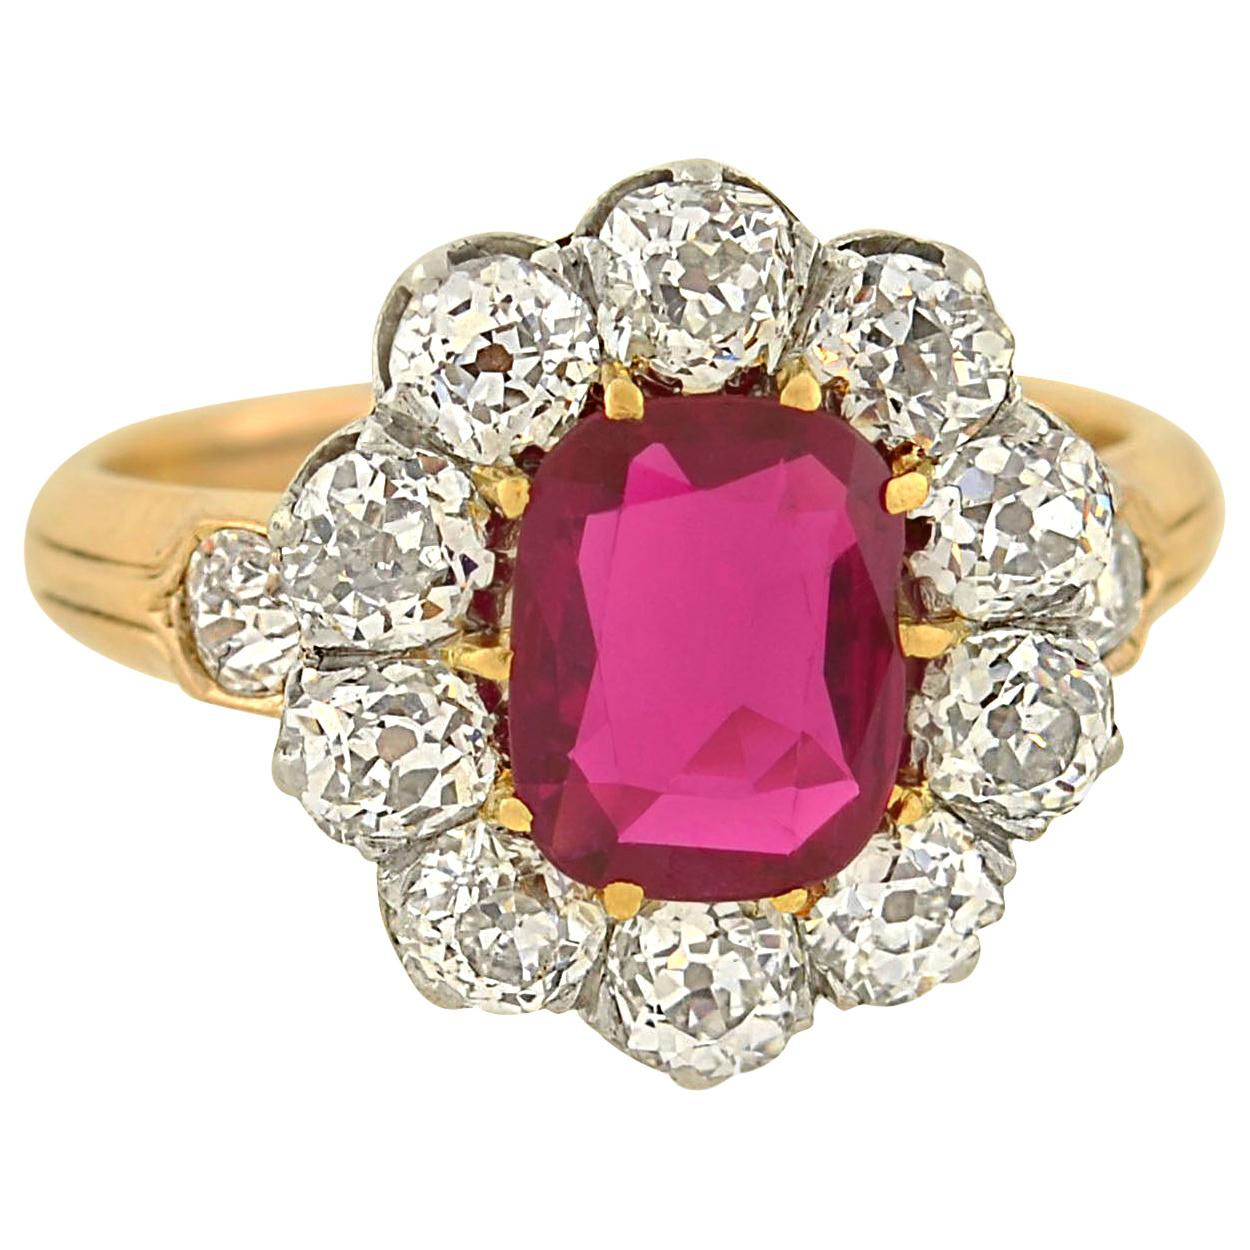 Edwardian 1.20 Carat Natural Untreated Burma Ruby Diamond Ring